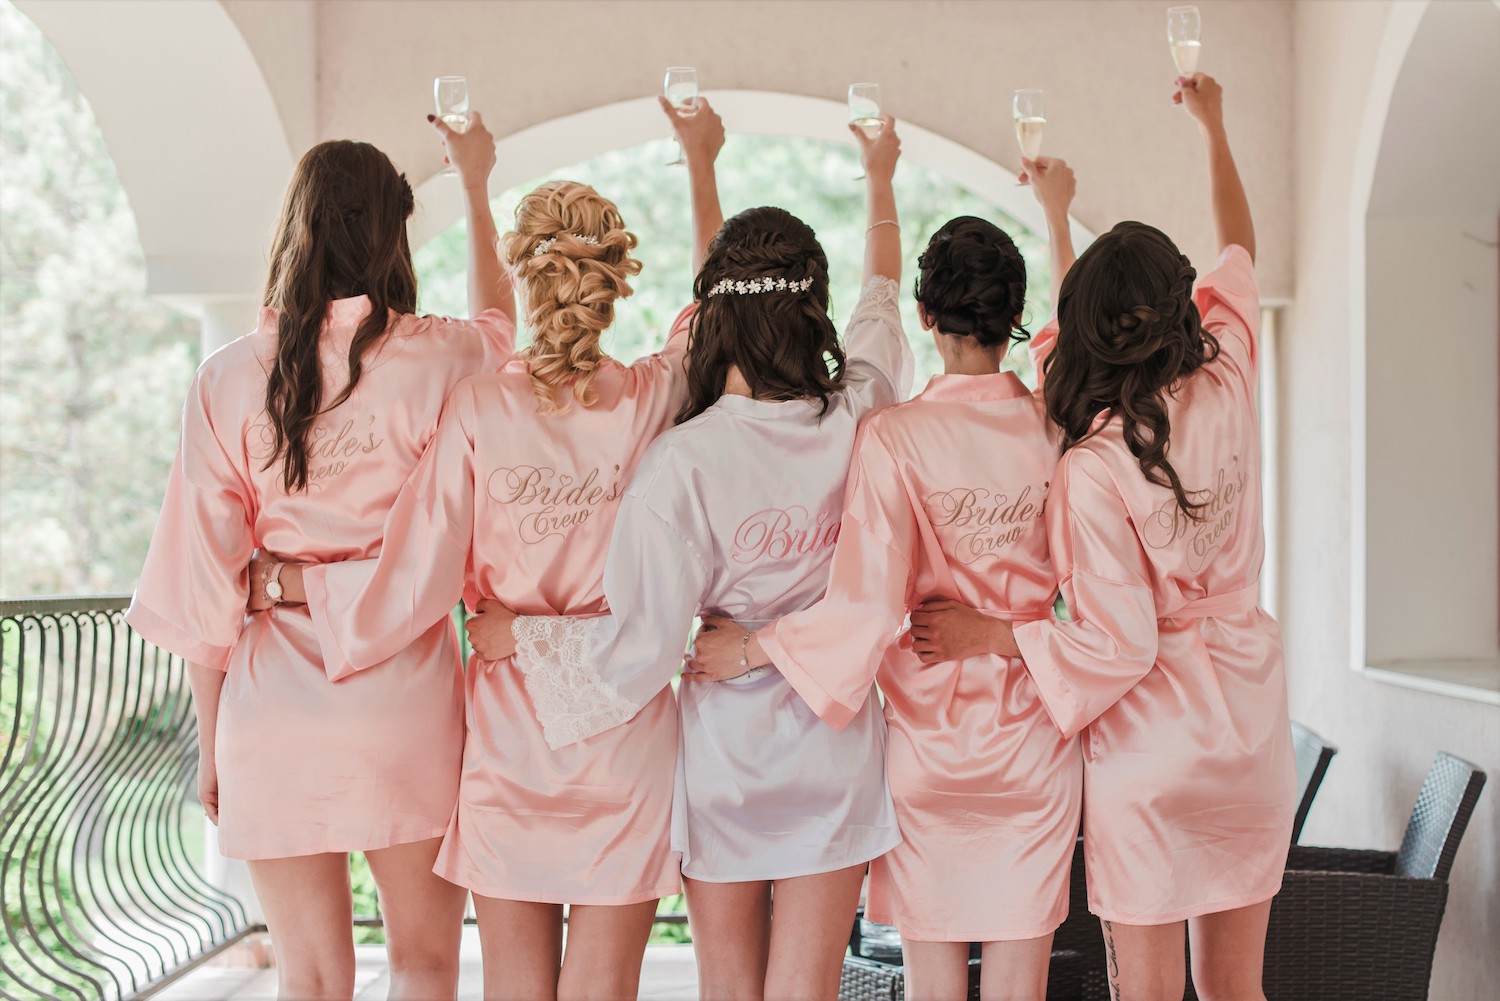 Bruid met vier bruidsmeisjes in kimono's heffen glas champagne